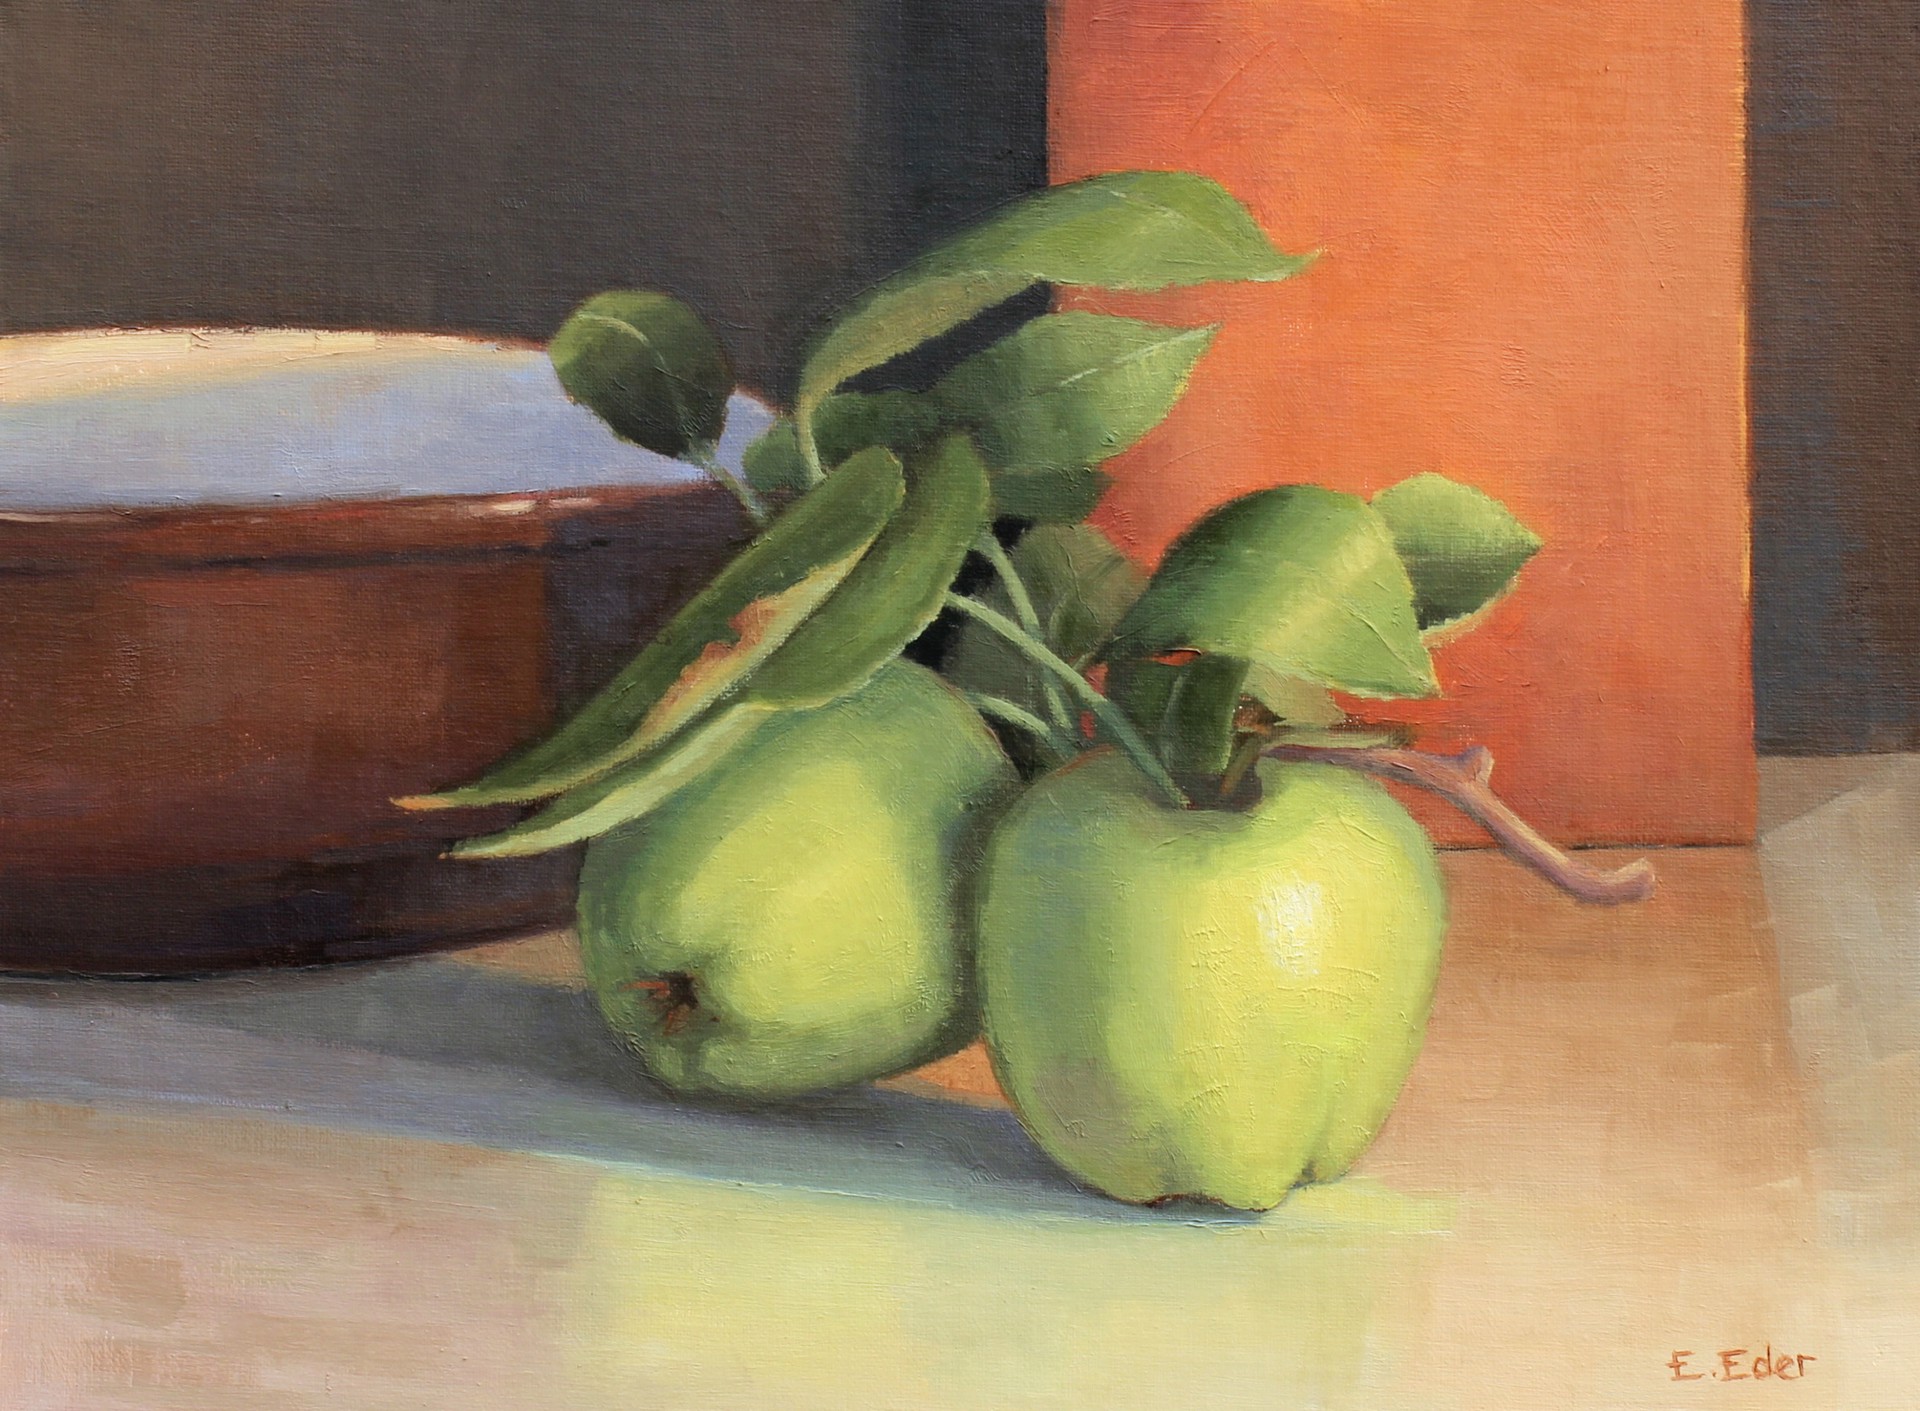 Green Apples by Eileen Eder